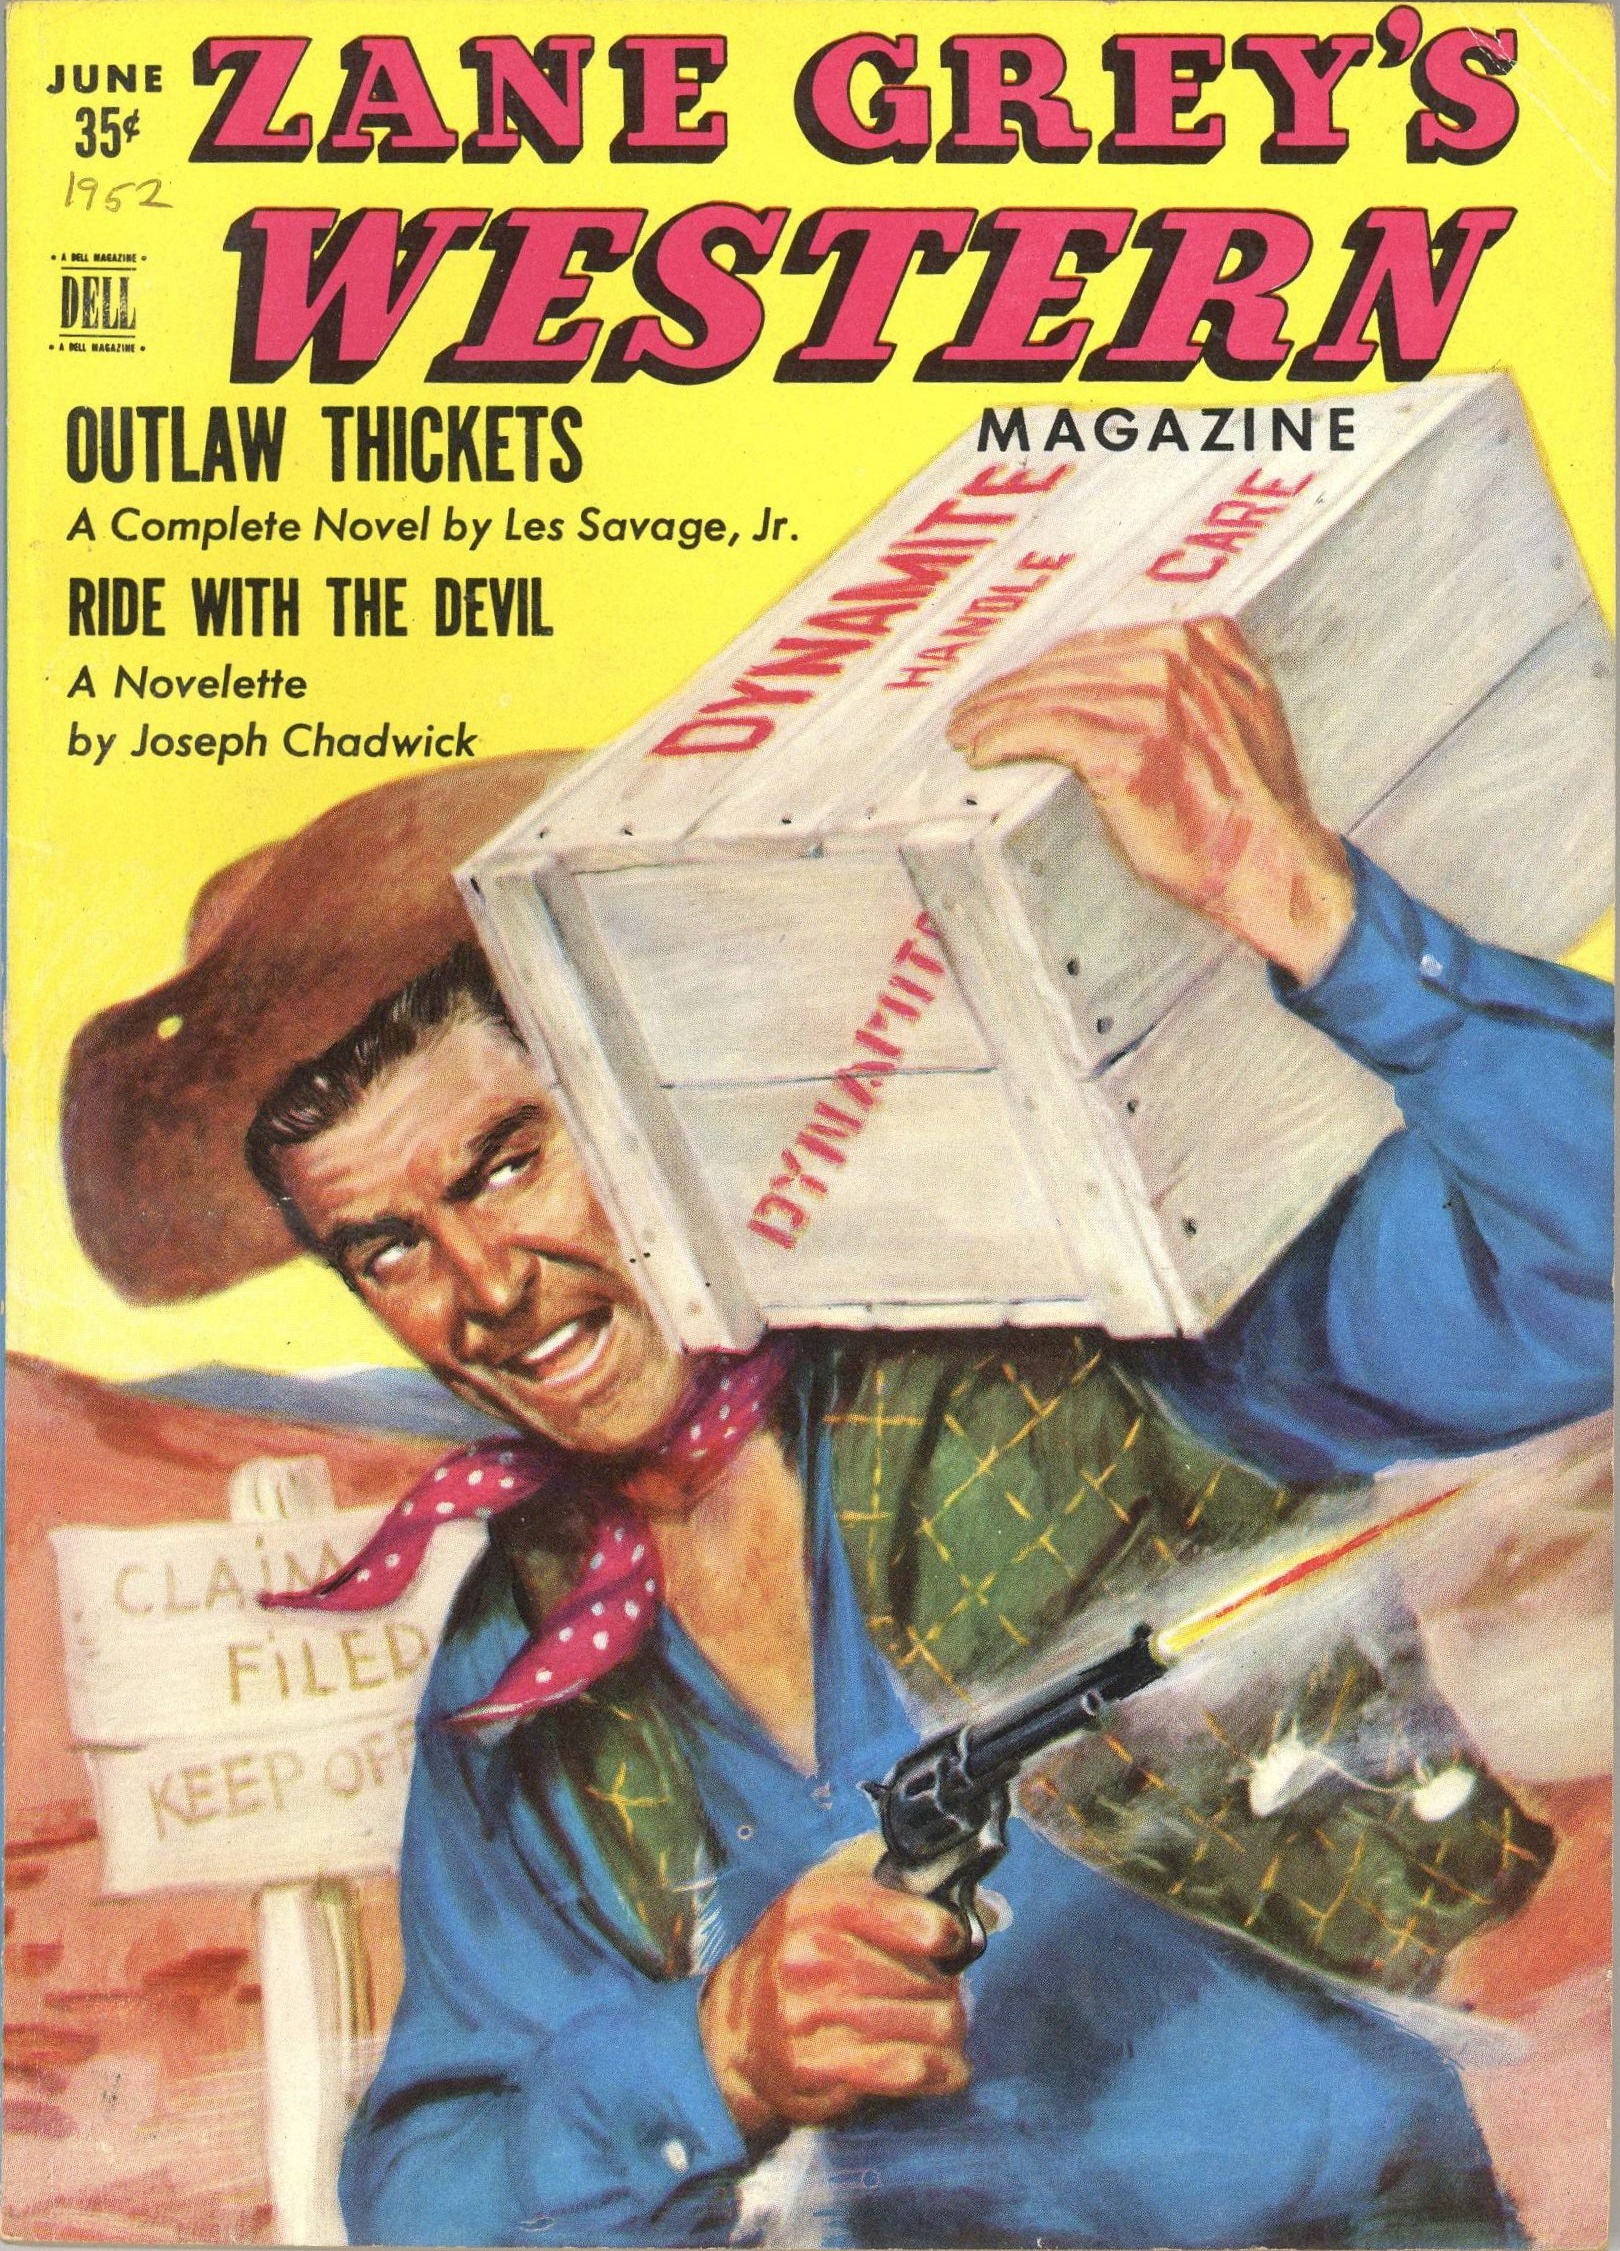 Zane Grey's Western Magazine June 1952